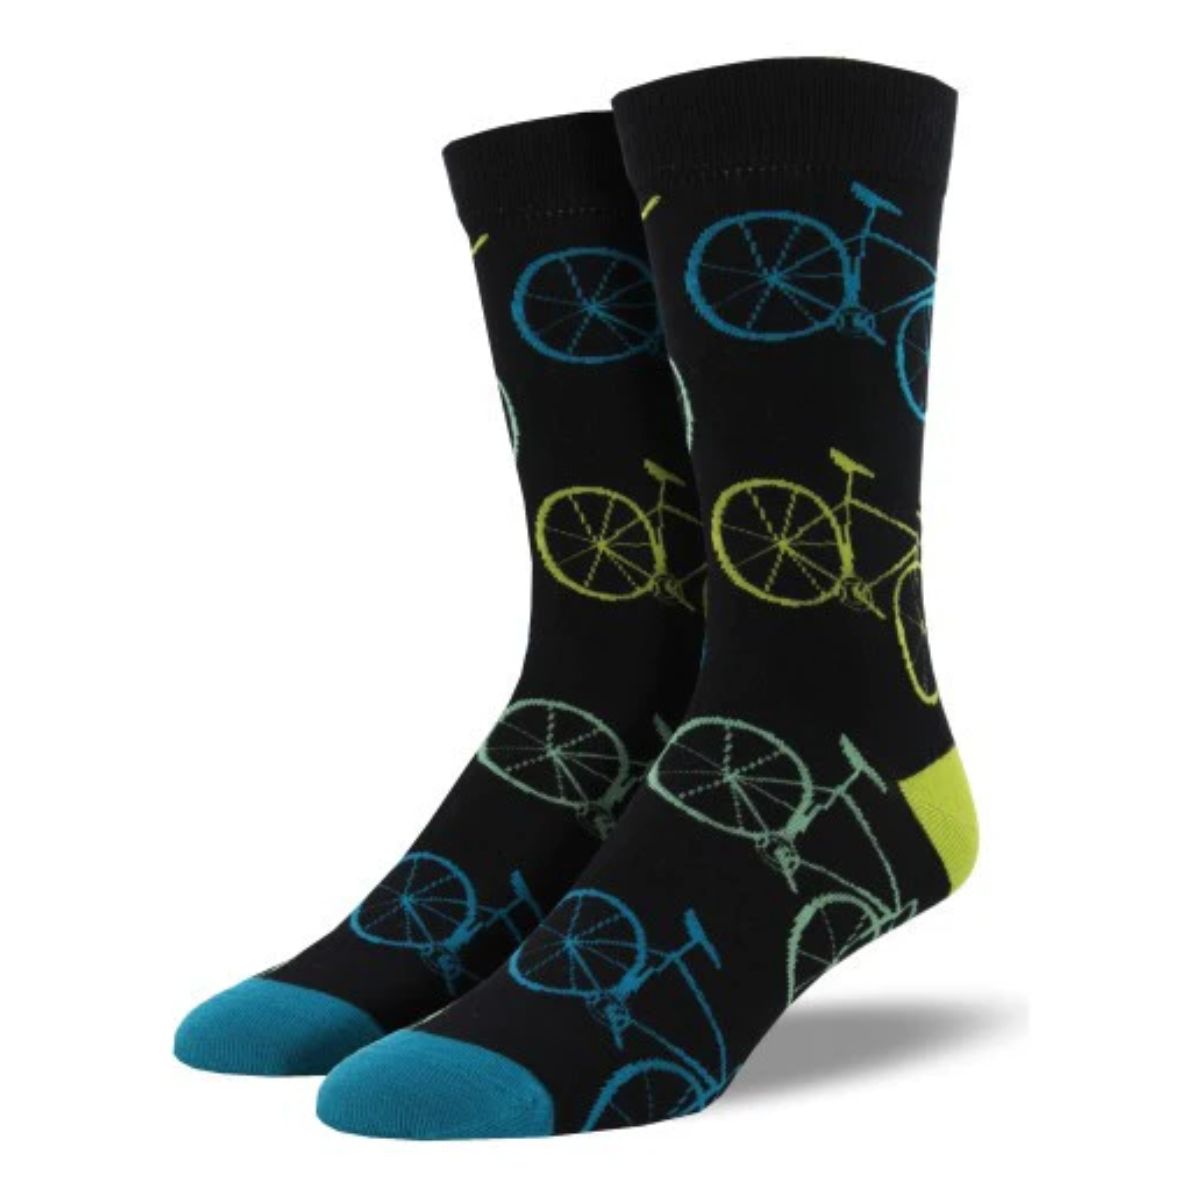 Fixie socks a pair of black crew socks with bicycle print